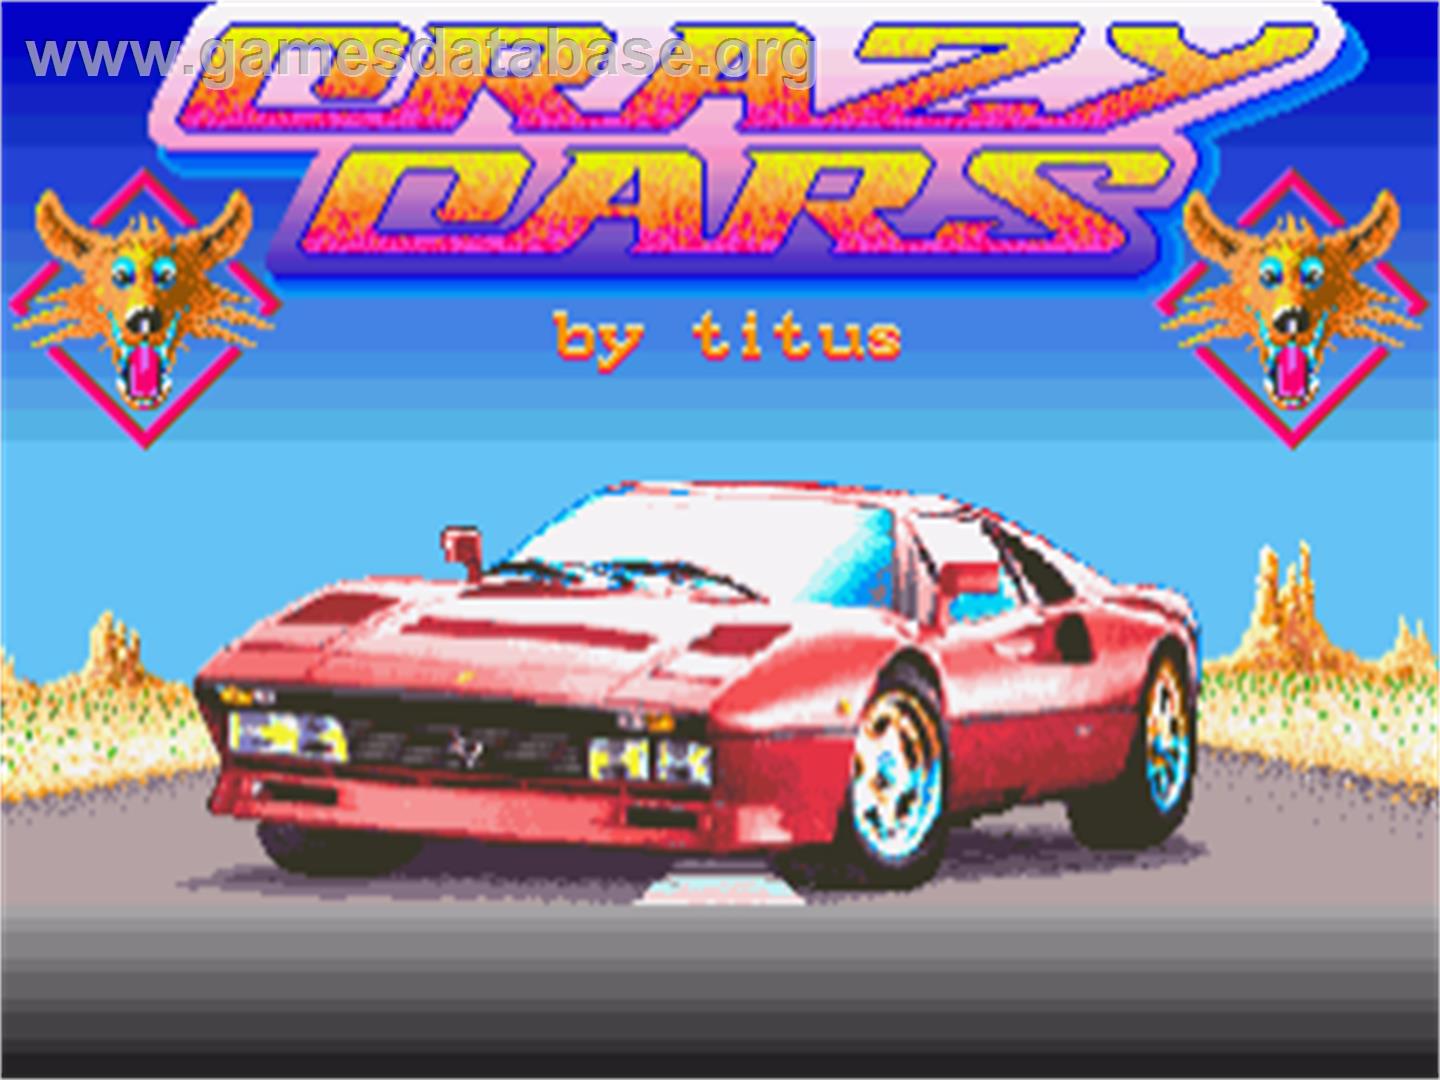 Crazy Cars - Commodore Amiga - Artwork - Title Screen